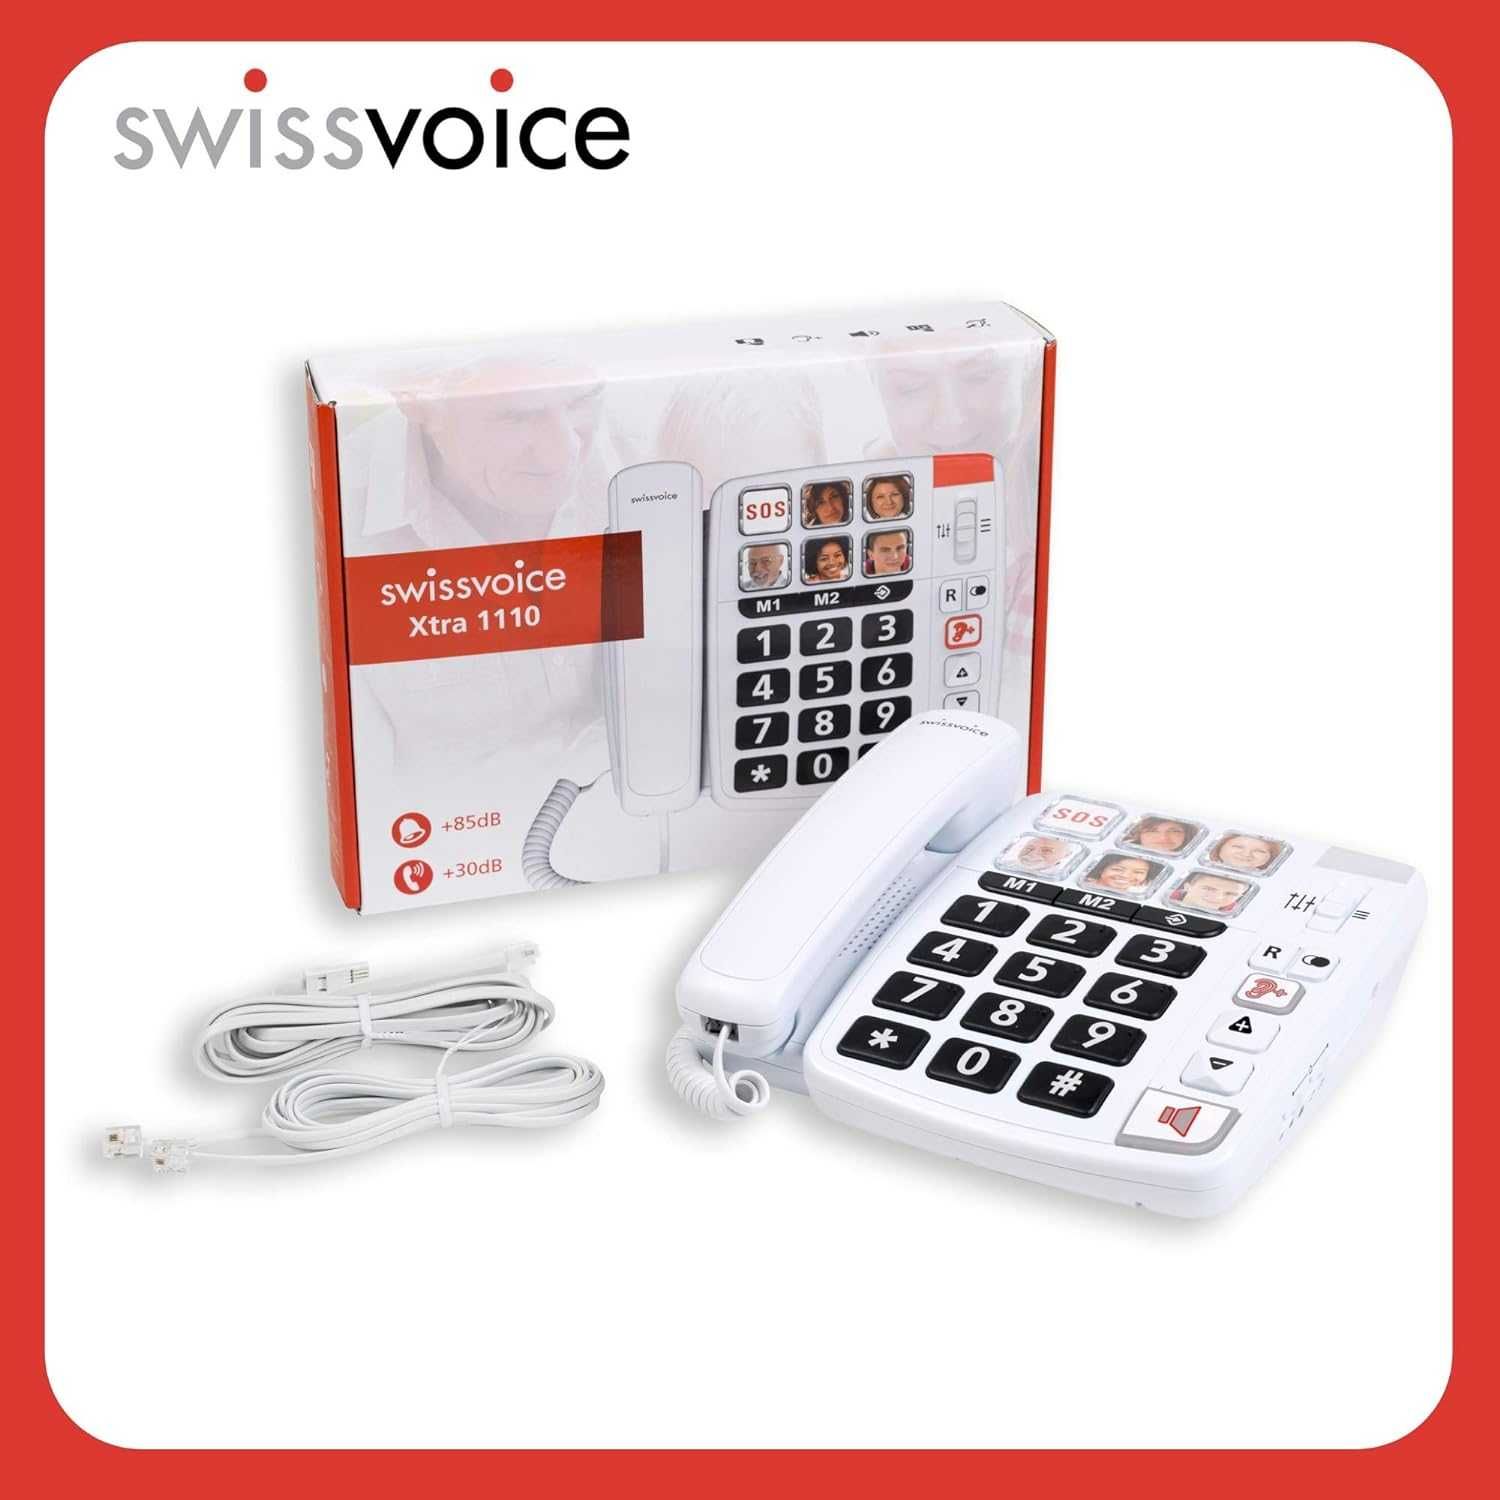 Telefon Fix vârstnici Swiss Voice Xtra 1110, sunet puternic.Nou